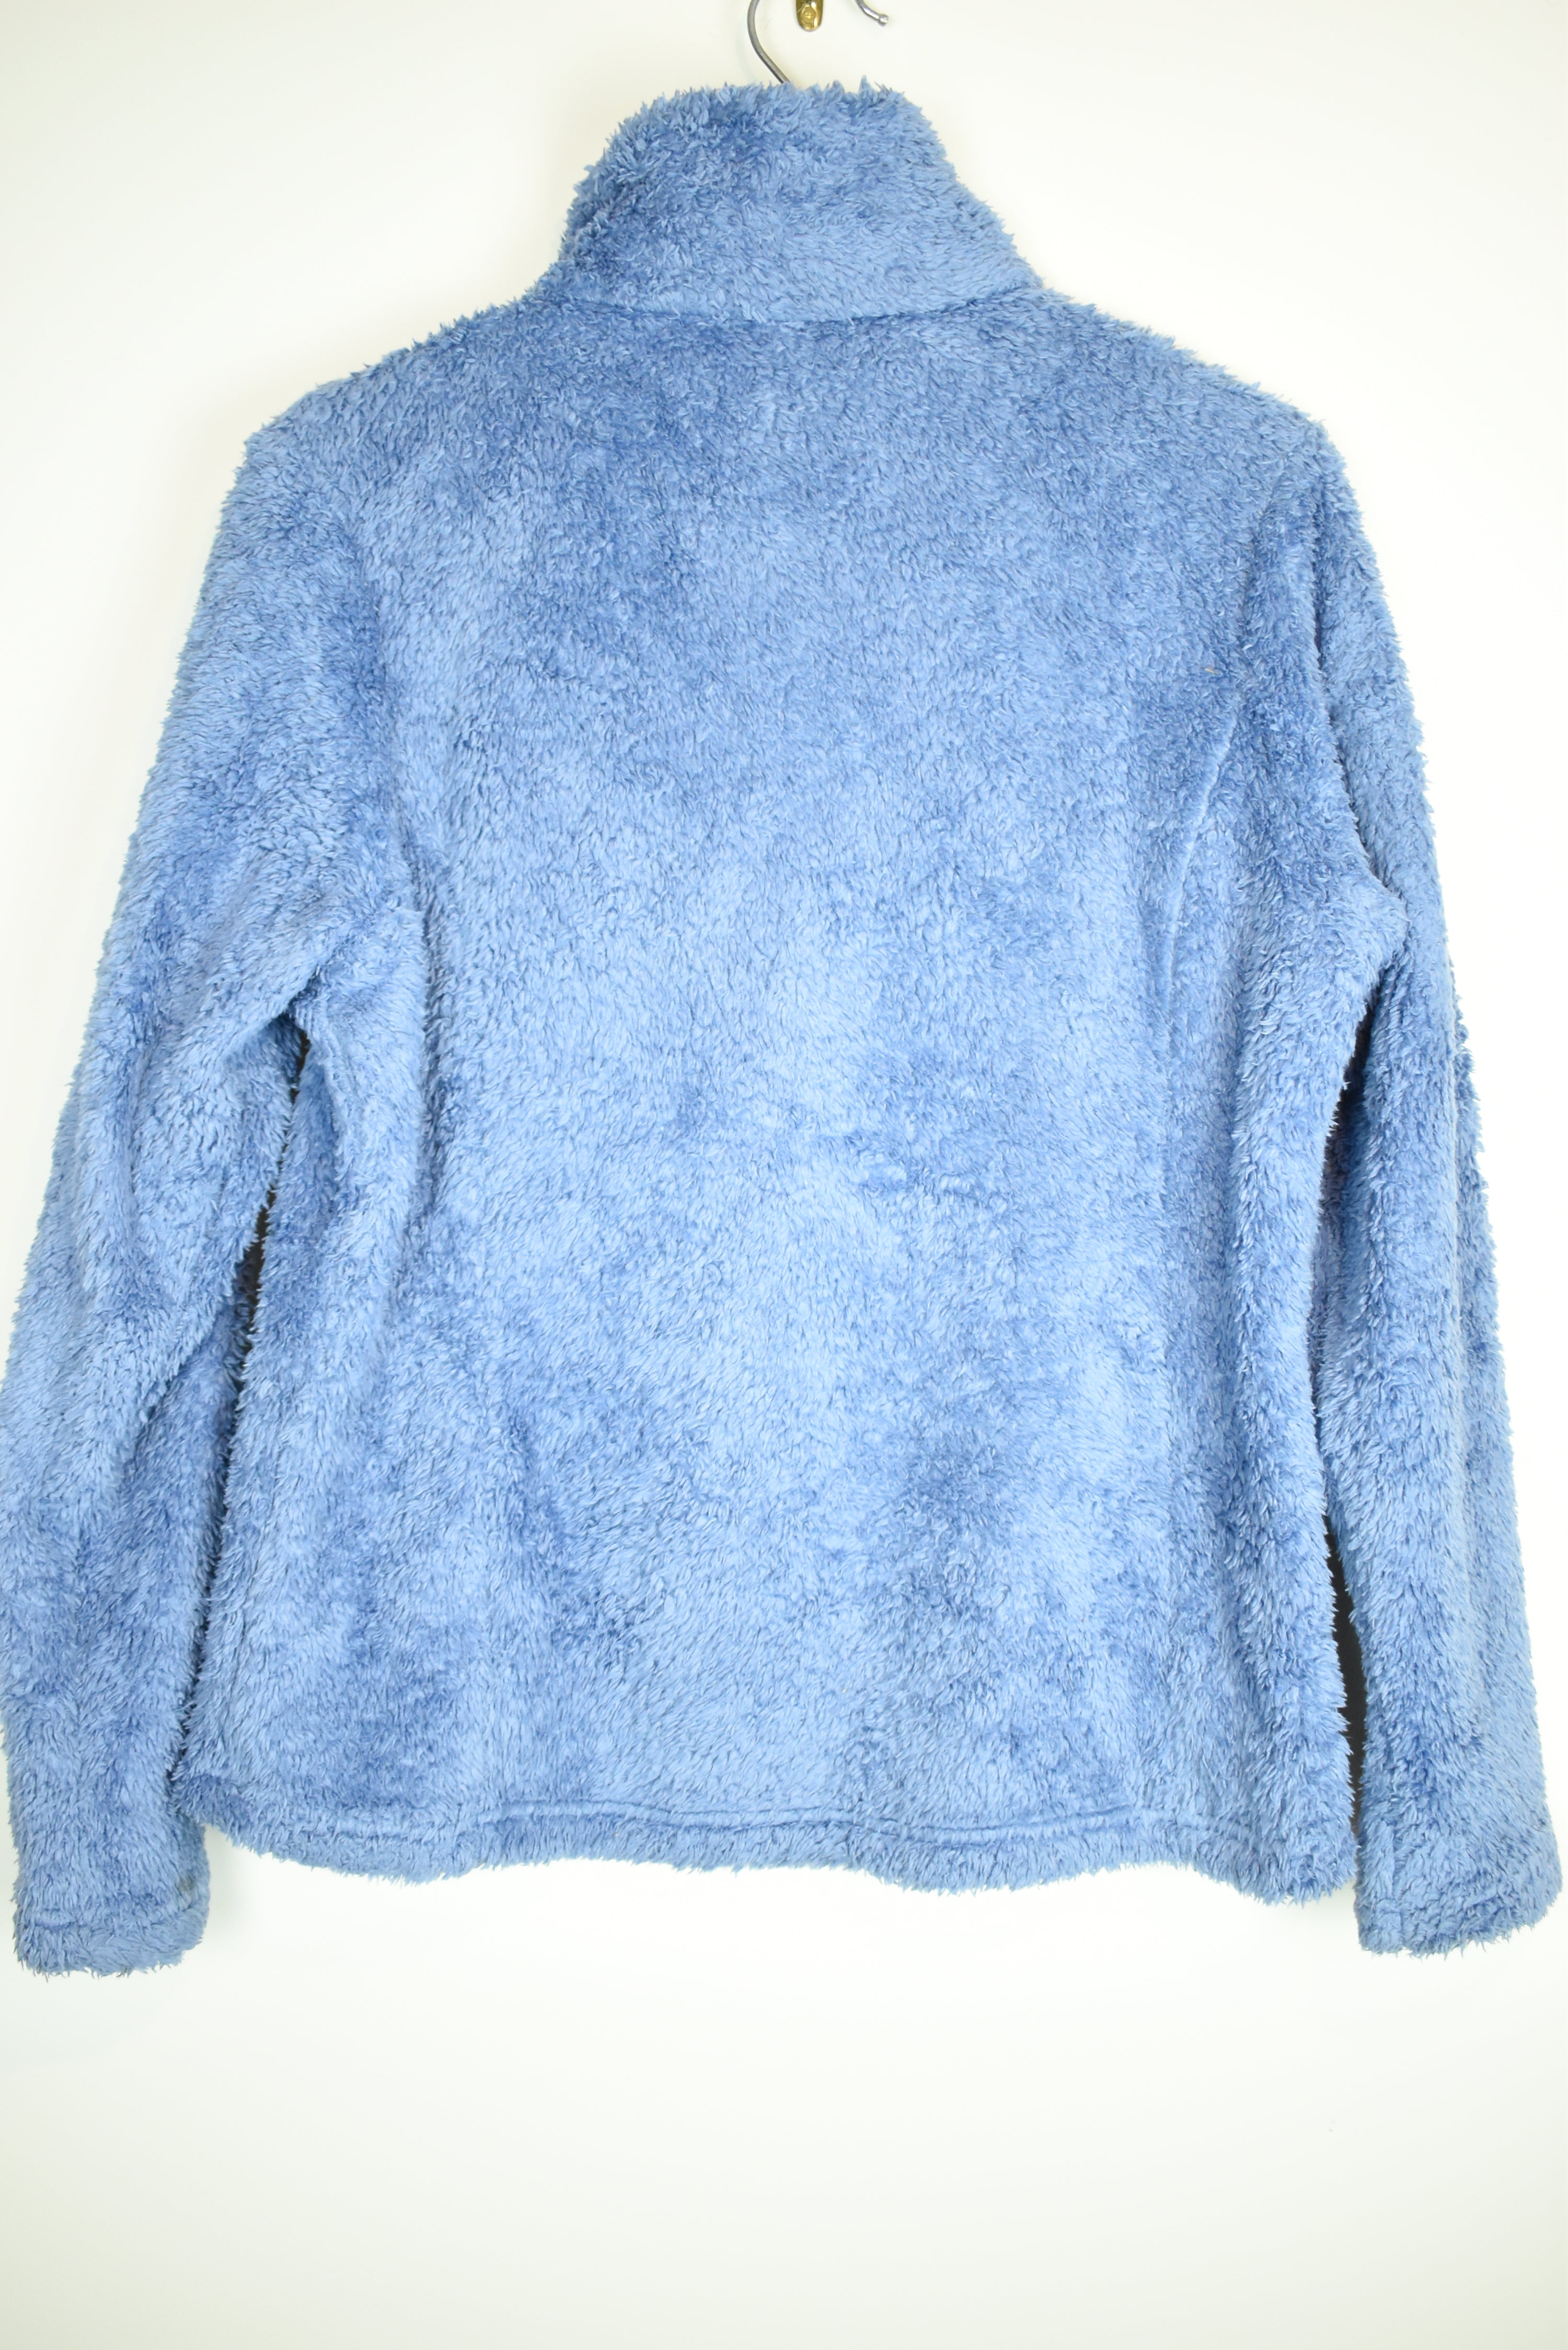 Vintage Patagonia Polar Fleece Medium | Vintage Clothing